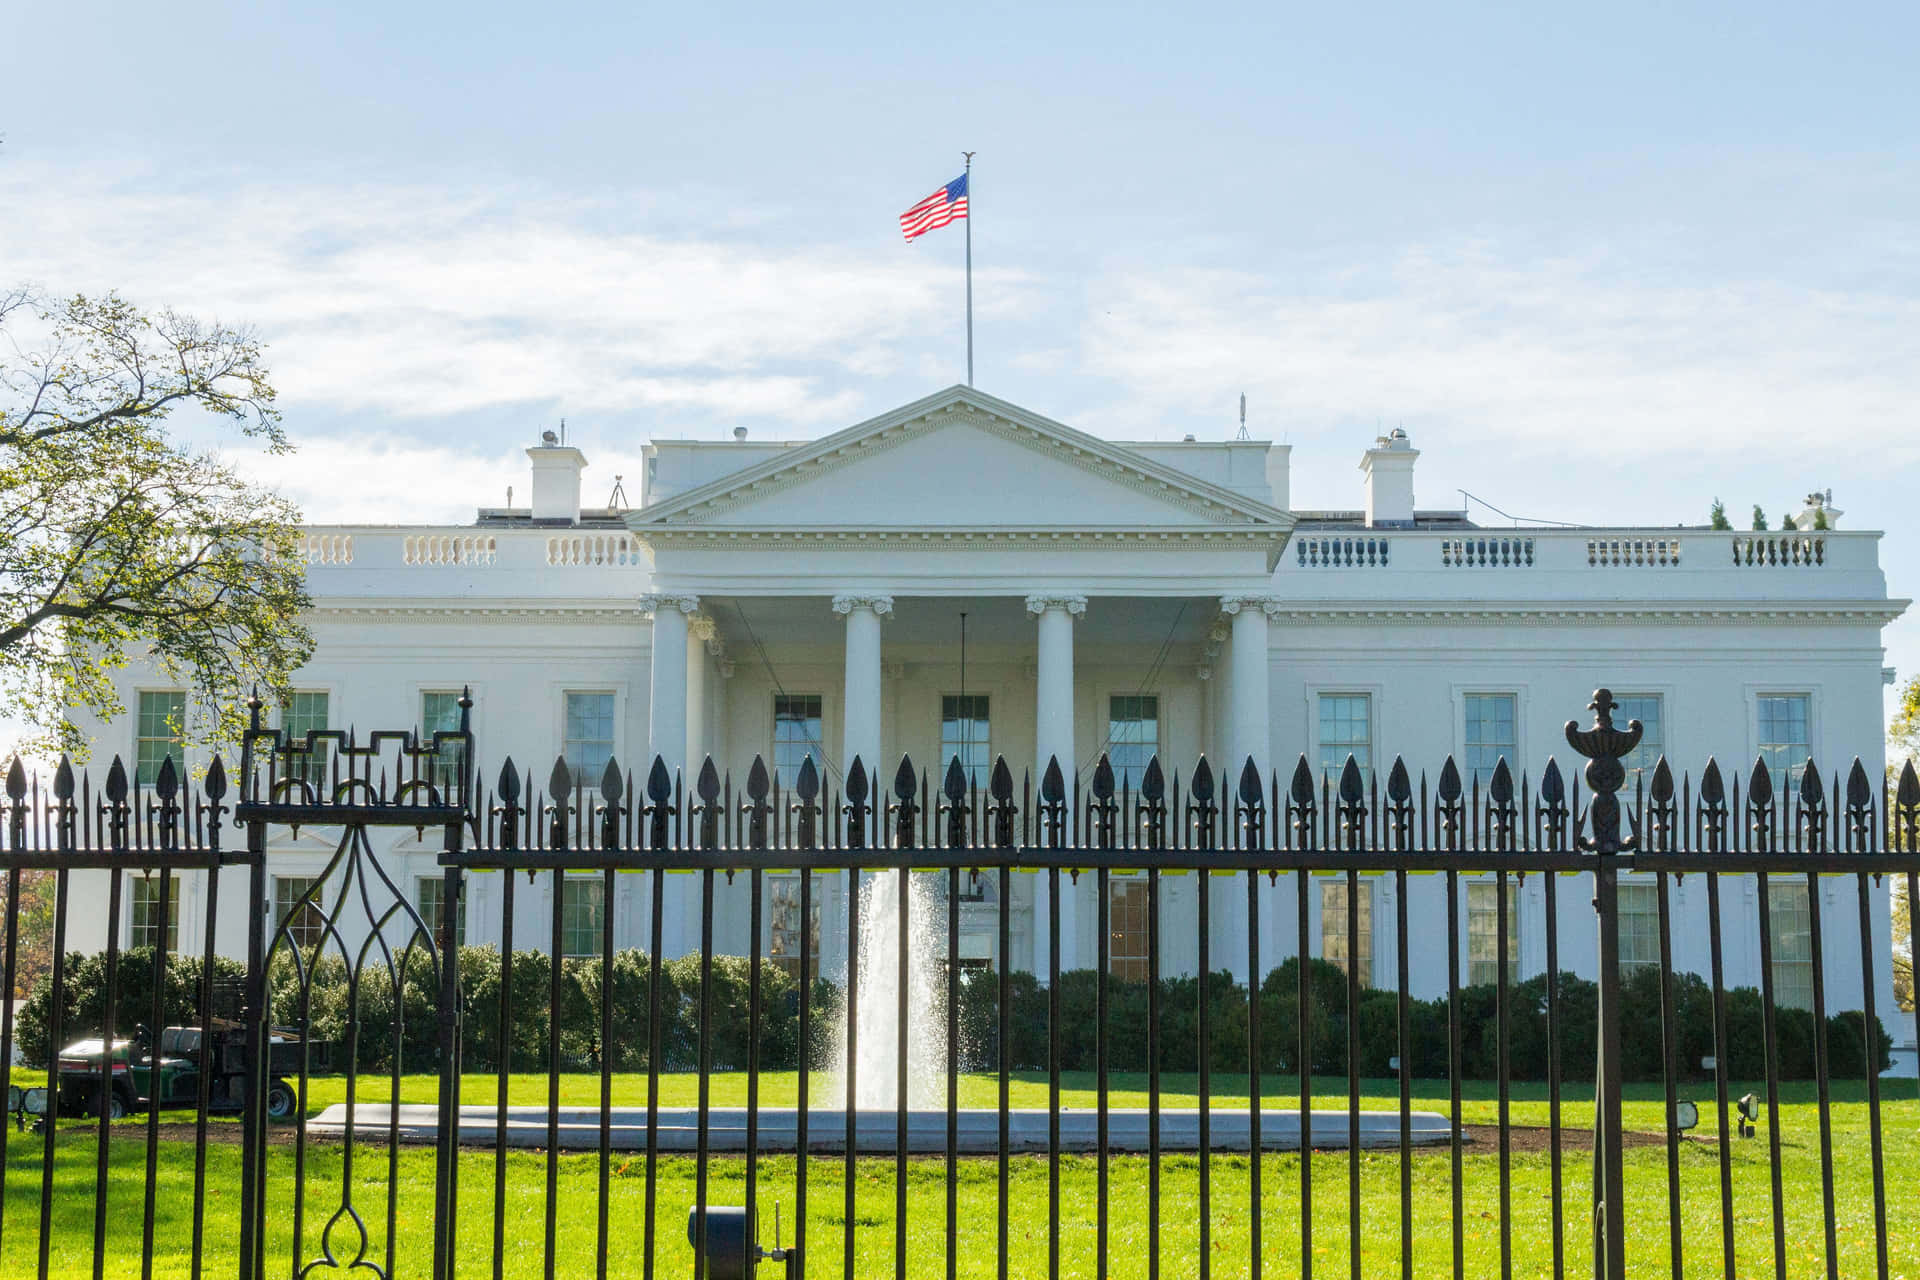 The iconic White House in Washington, DC